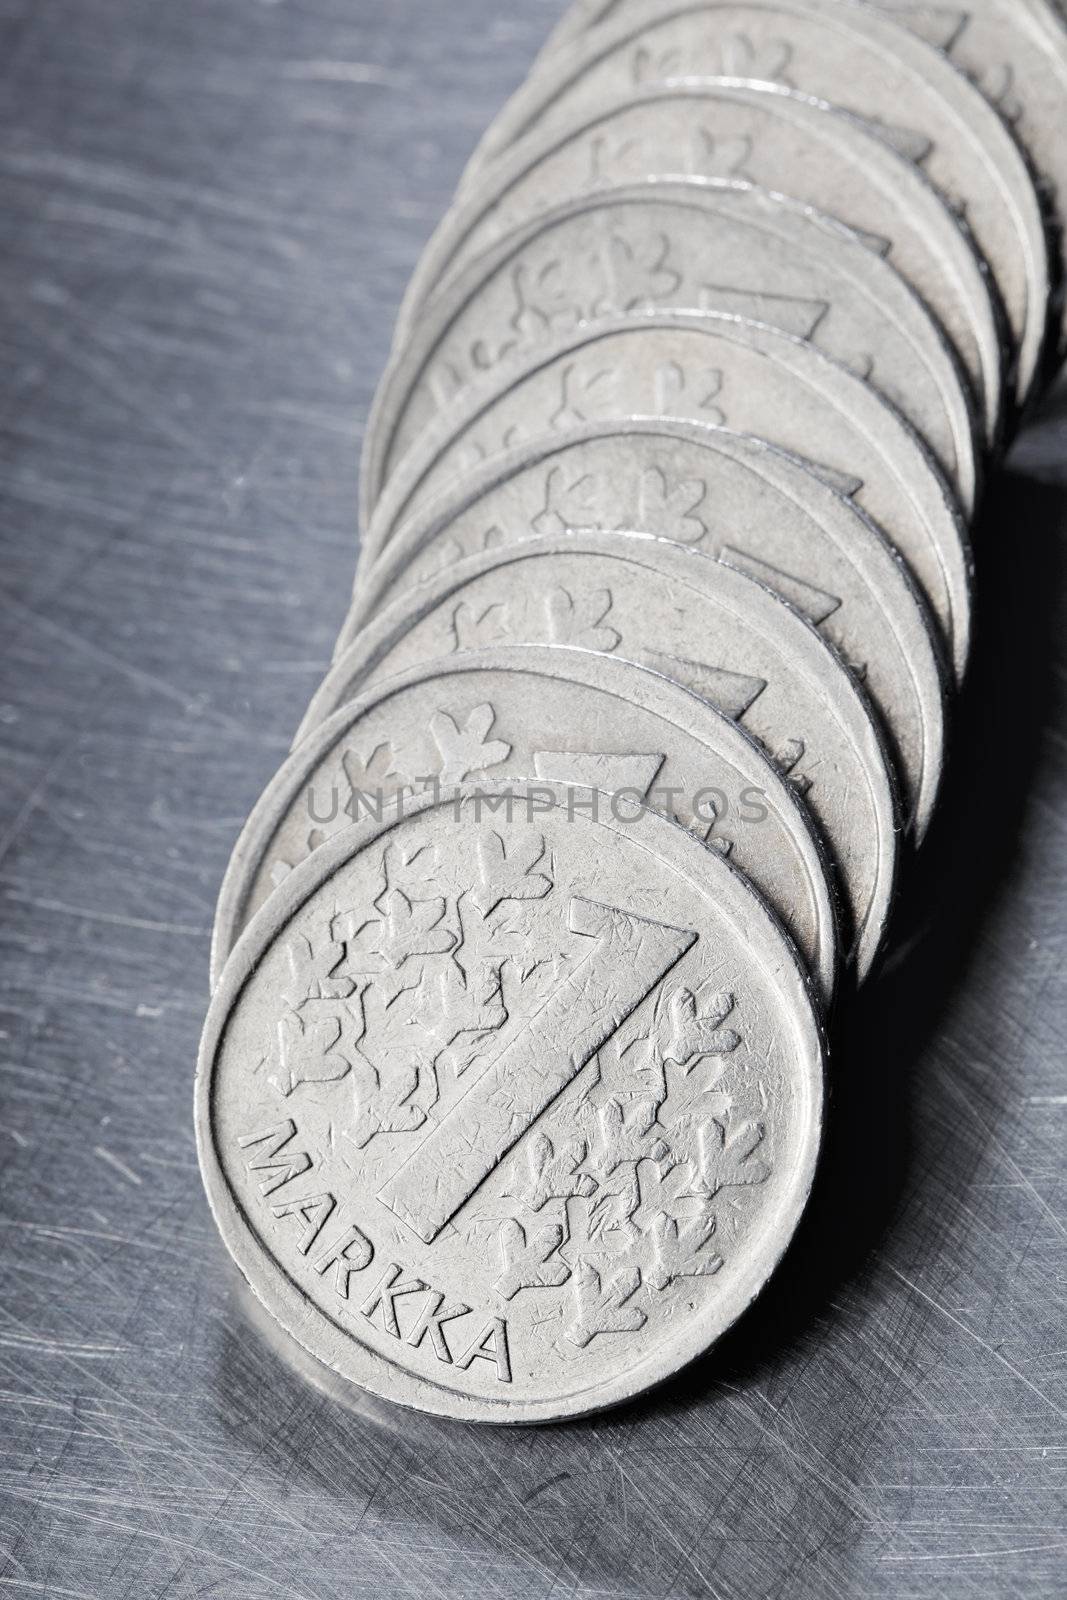 Markka Coins by Stocksnapper